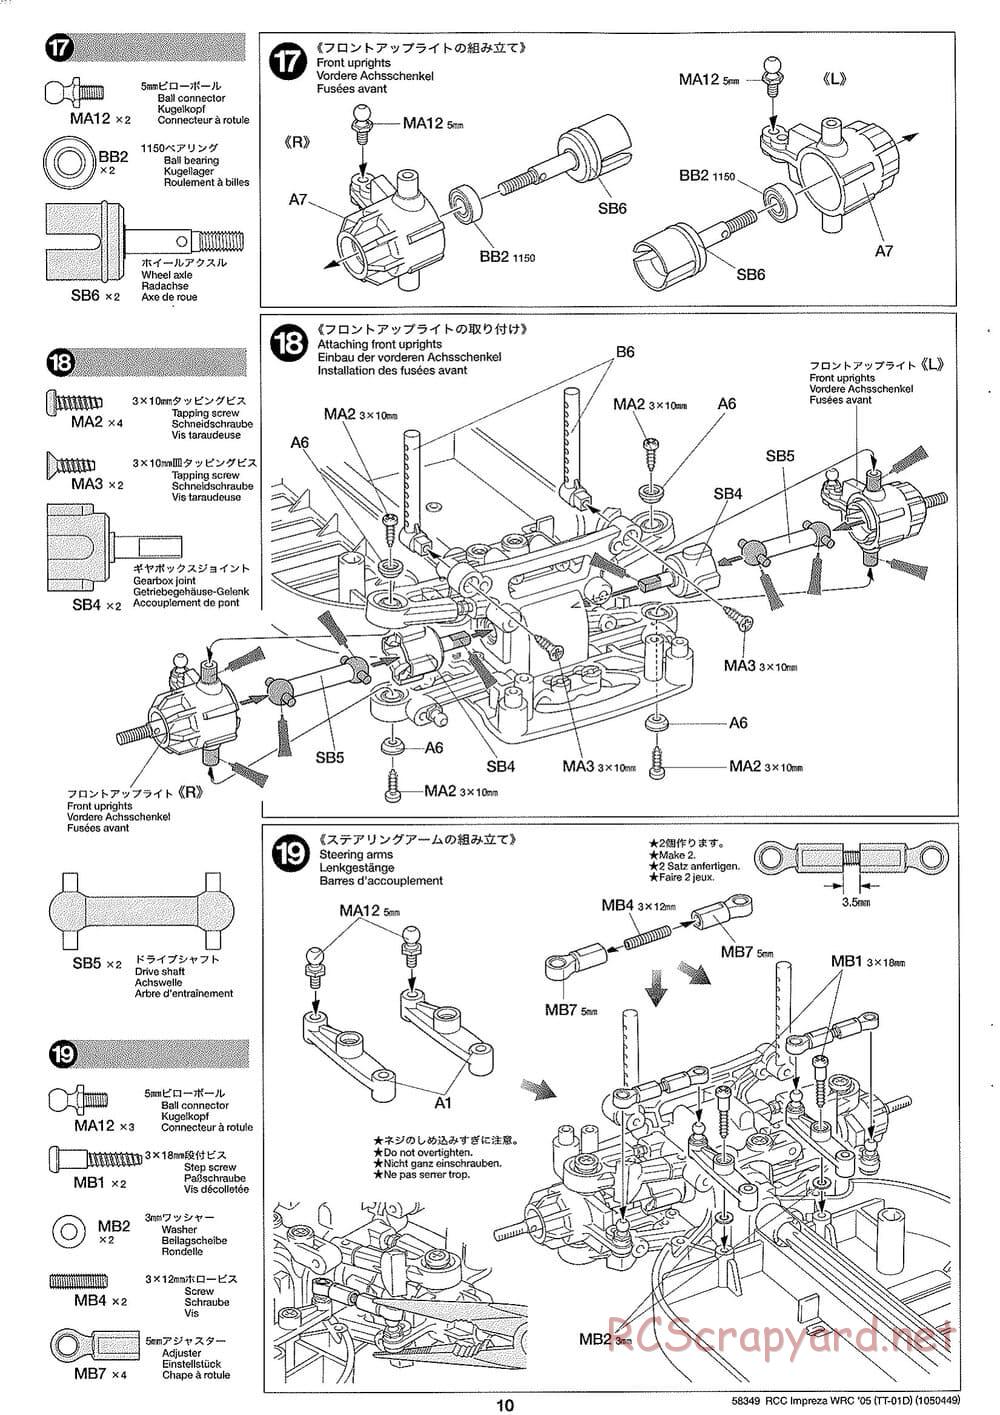 Tamiya - Subaru Impreza WRC Monte Carlo 05 - Drift Spec - TT-01D Chassis - Manual - Page 10